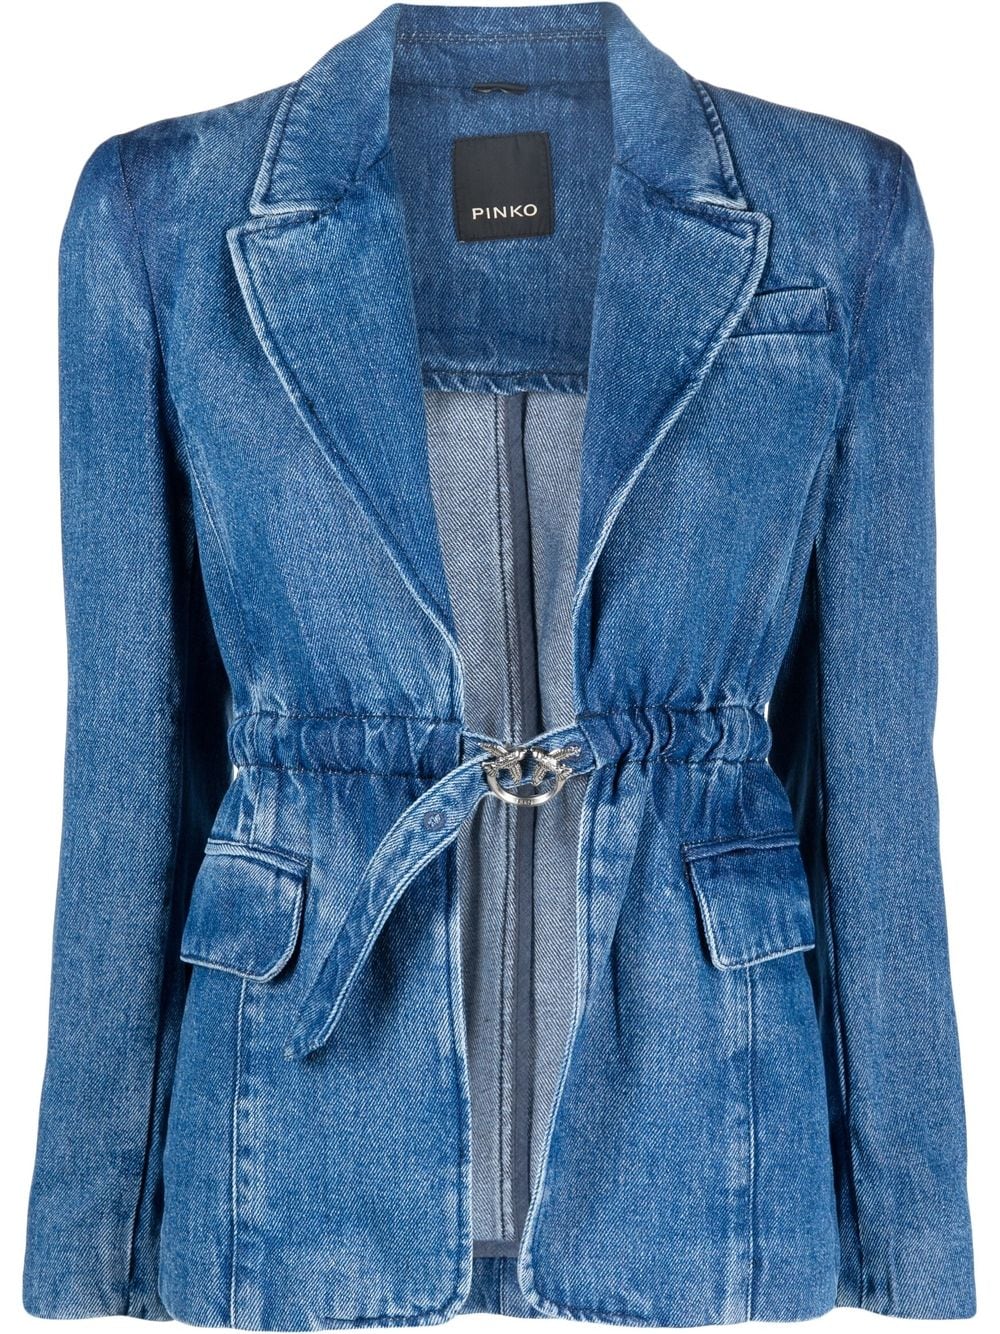 PINKO - logo-buckle denim blazer - women - Polyester/Cotton/Lyocell - 42 - Blue